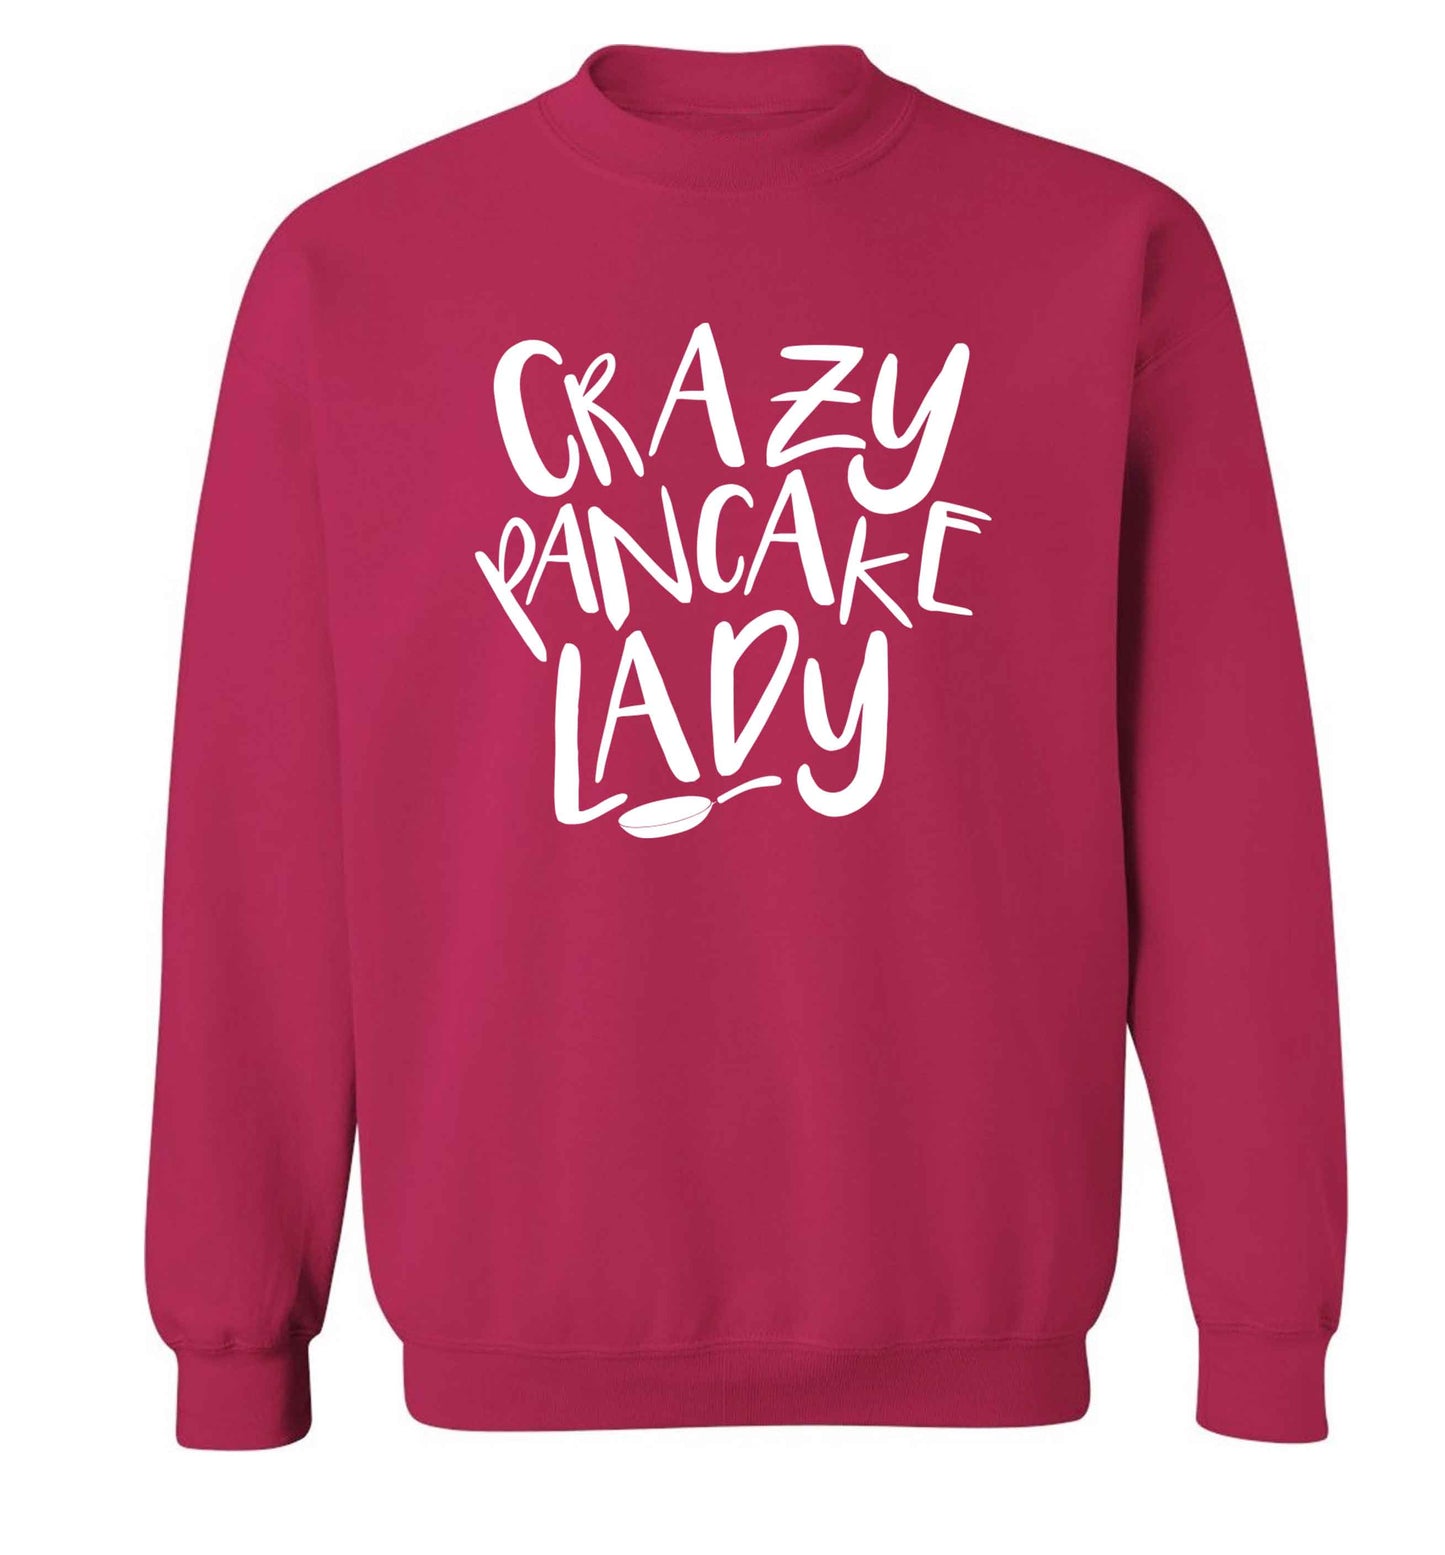 Crazy pancake lady adult's unisex pink sweater 2XL